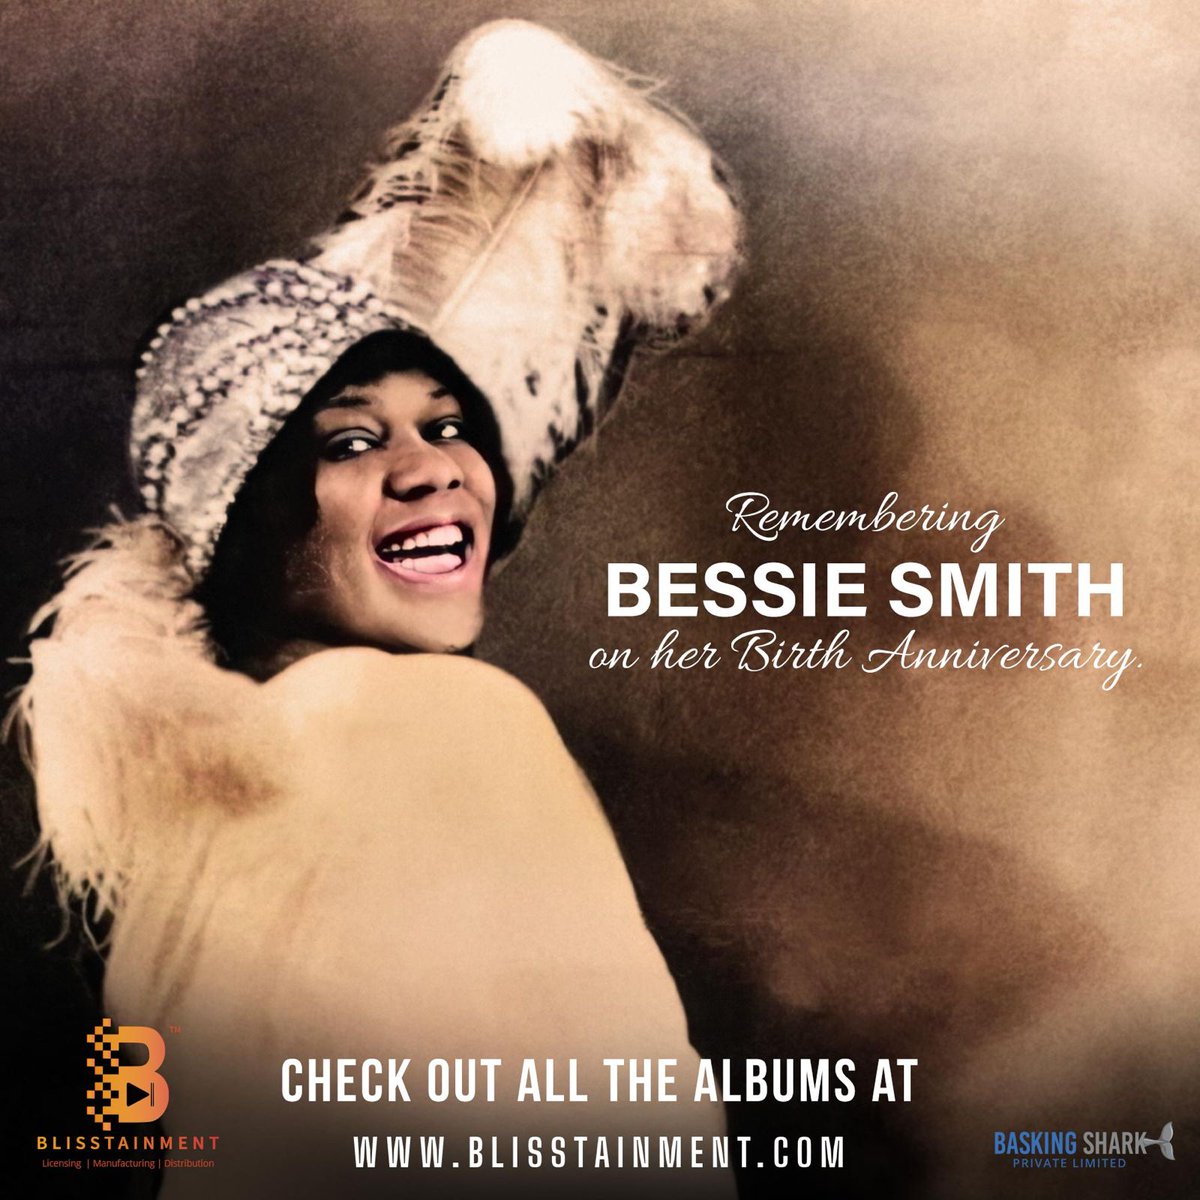 🎶Remembering the Empress of the Blues, Bessie Smith, on her birth anniversary. #BessieSmith #EmpressOfTheBlues #LegendBornToday